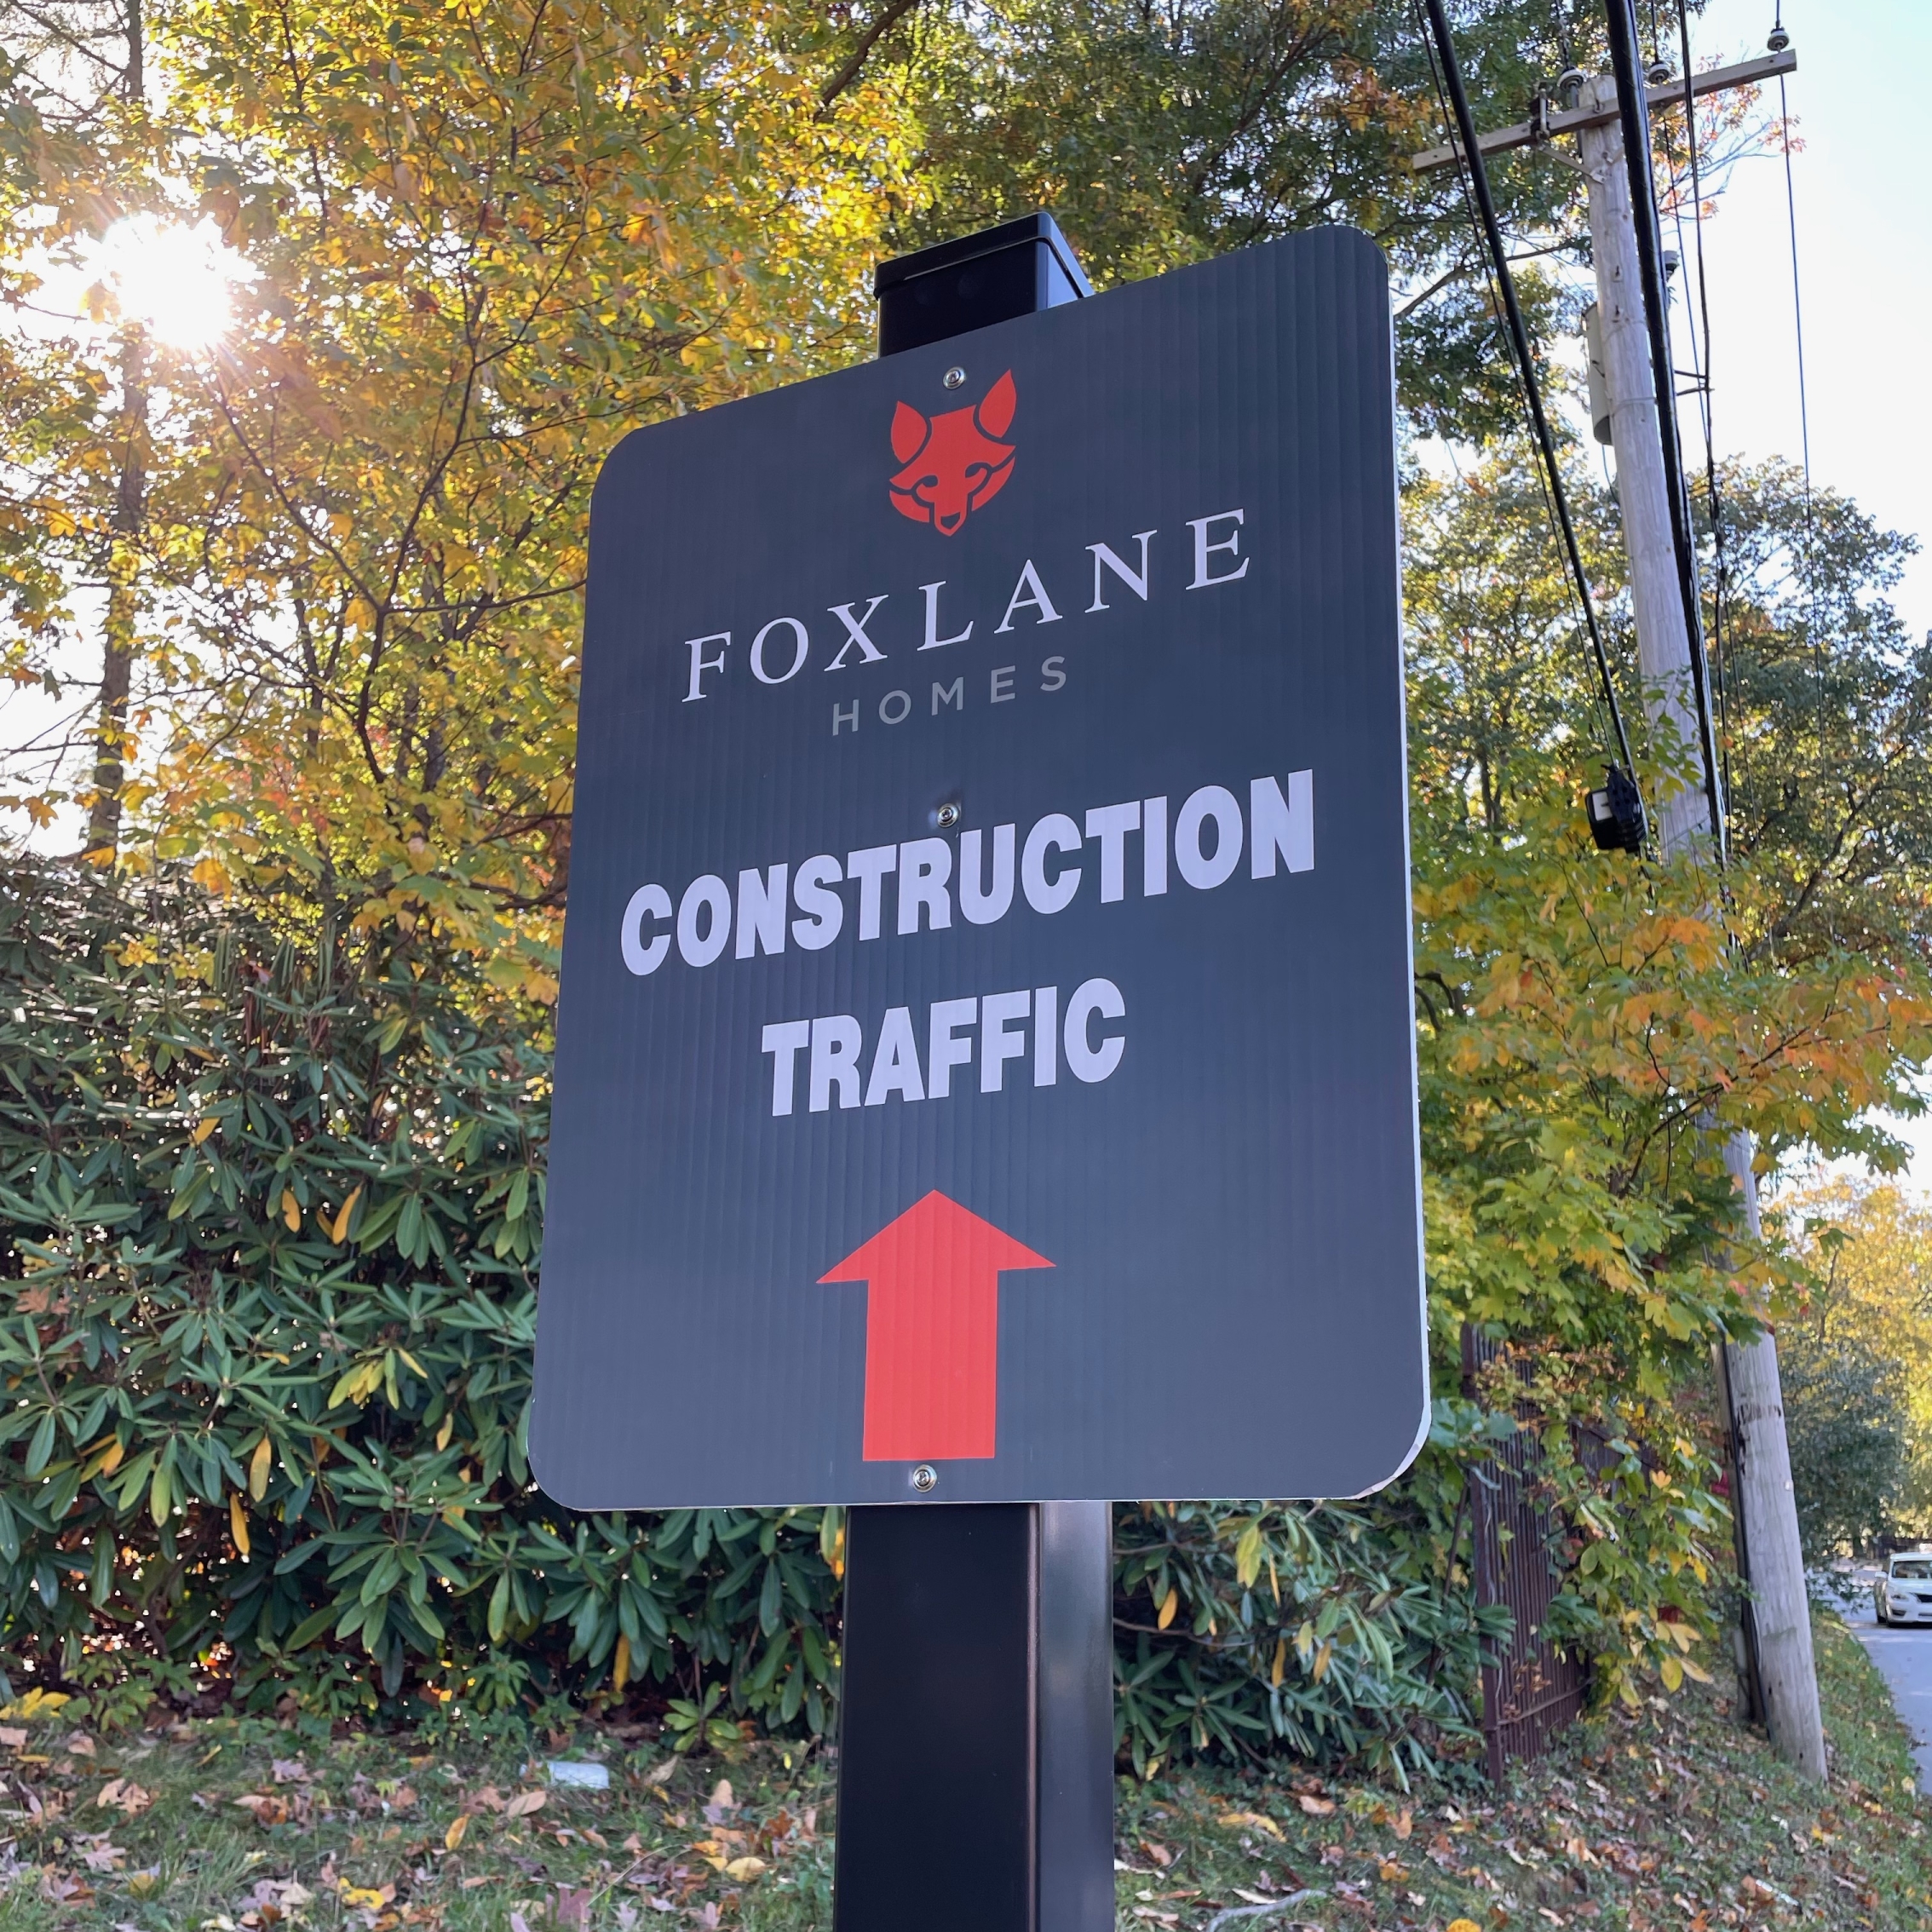 Foxlane Homes